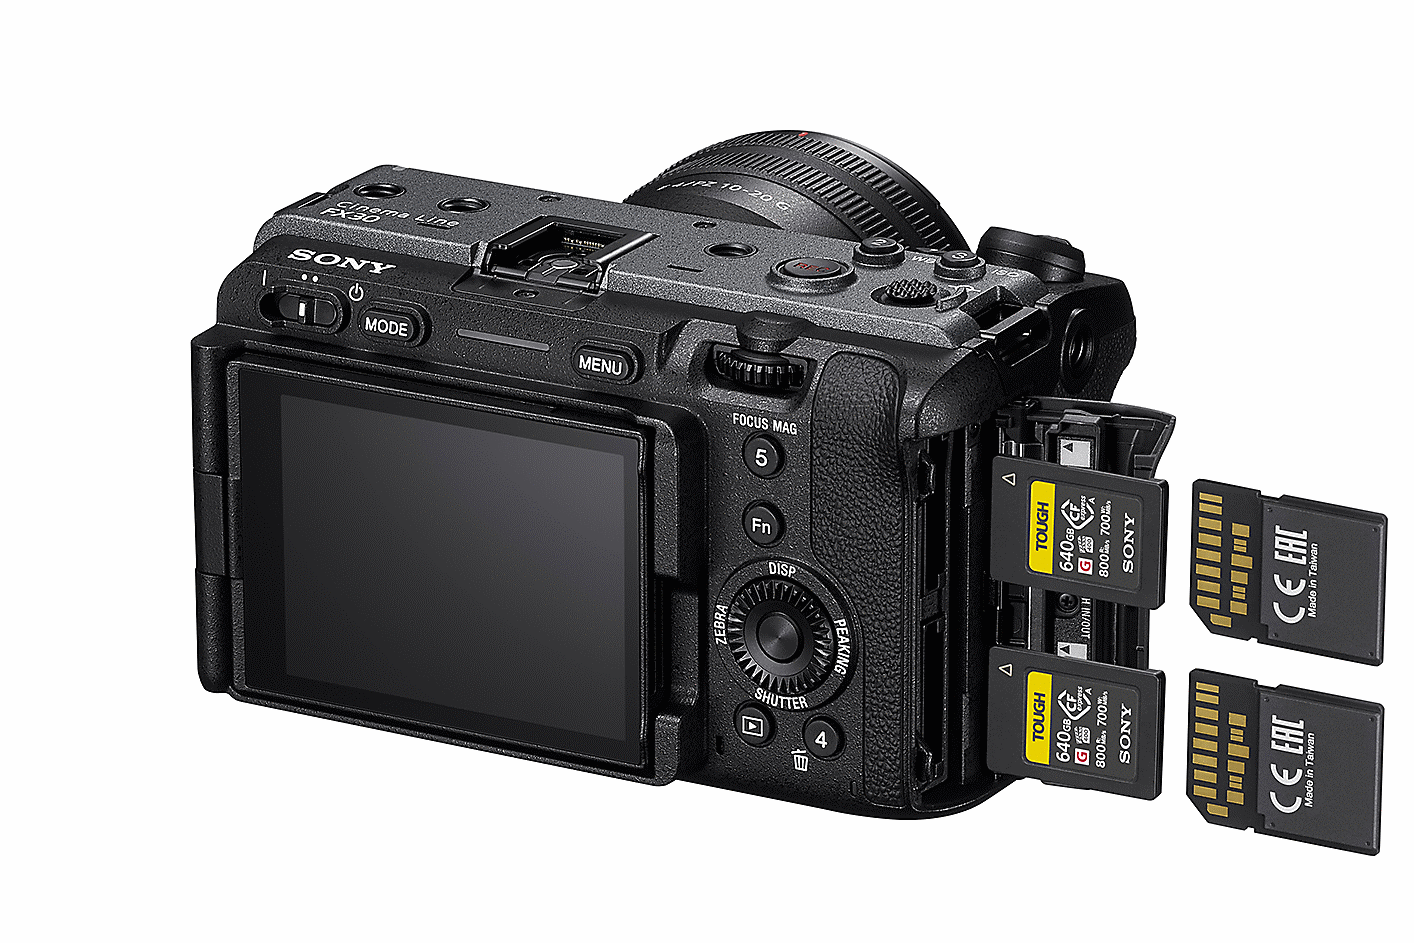 SD kart ve CFexpress kartlar bulunan fotoğraf makinesi